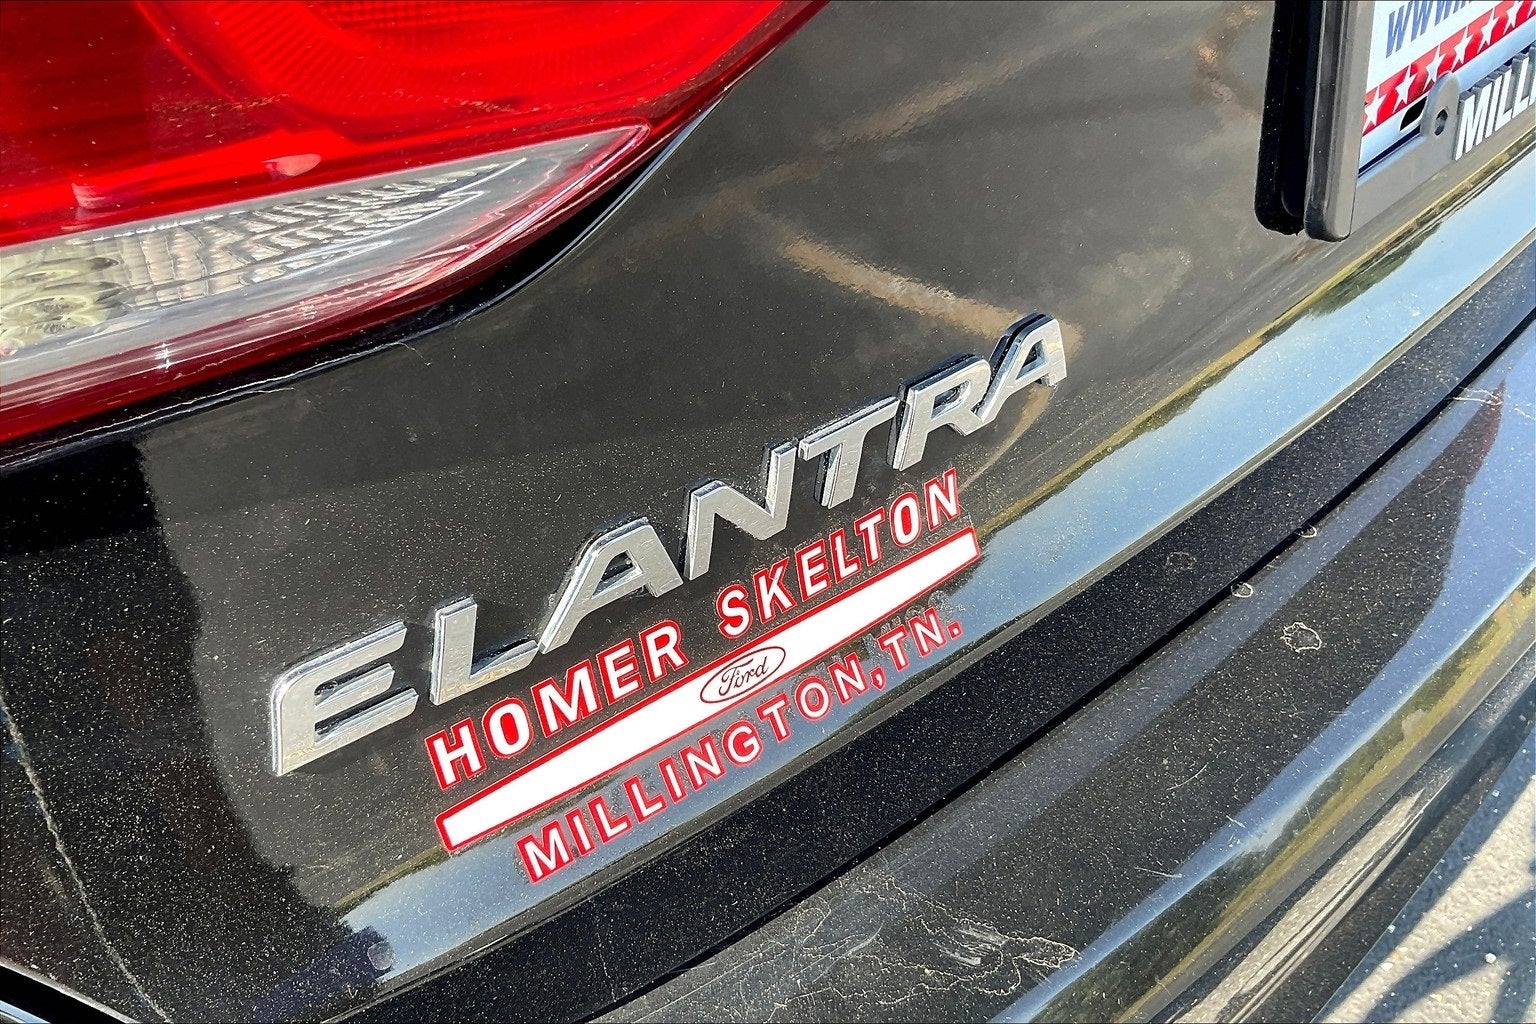 2018 Hyundai Elantra Value Edition